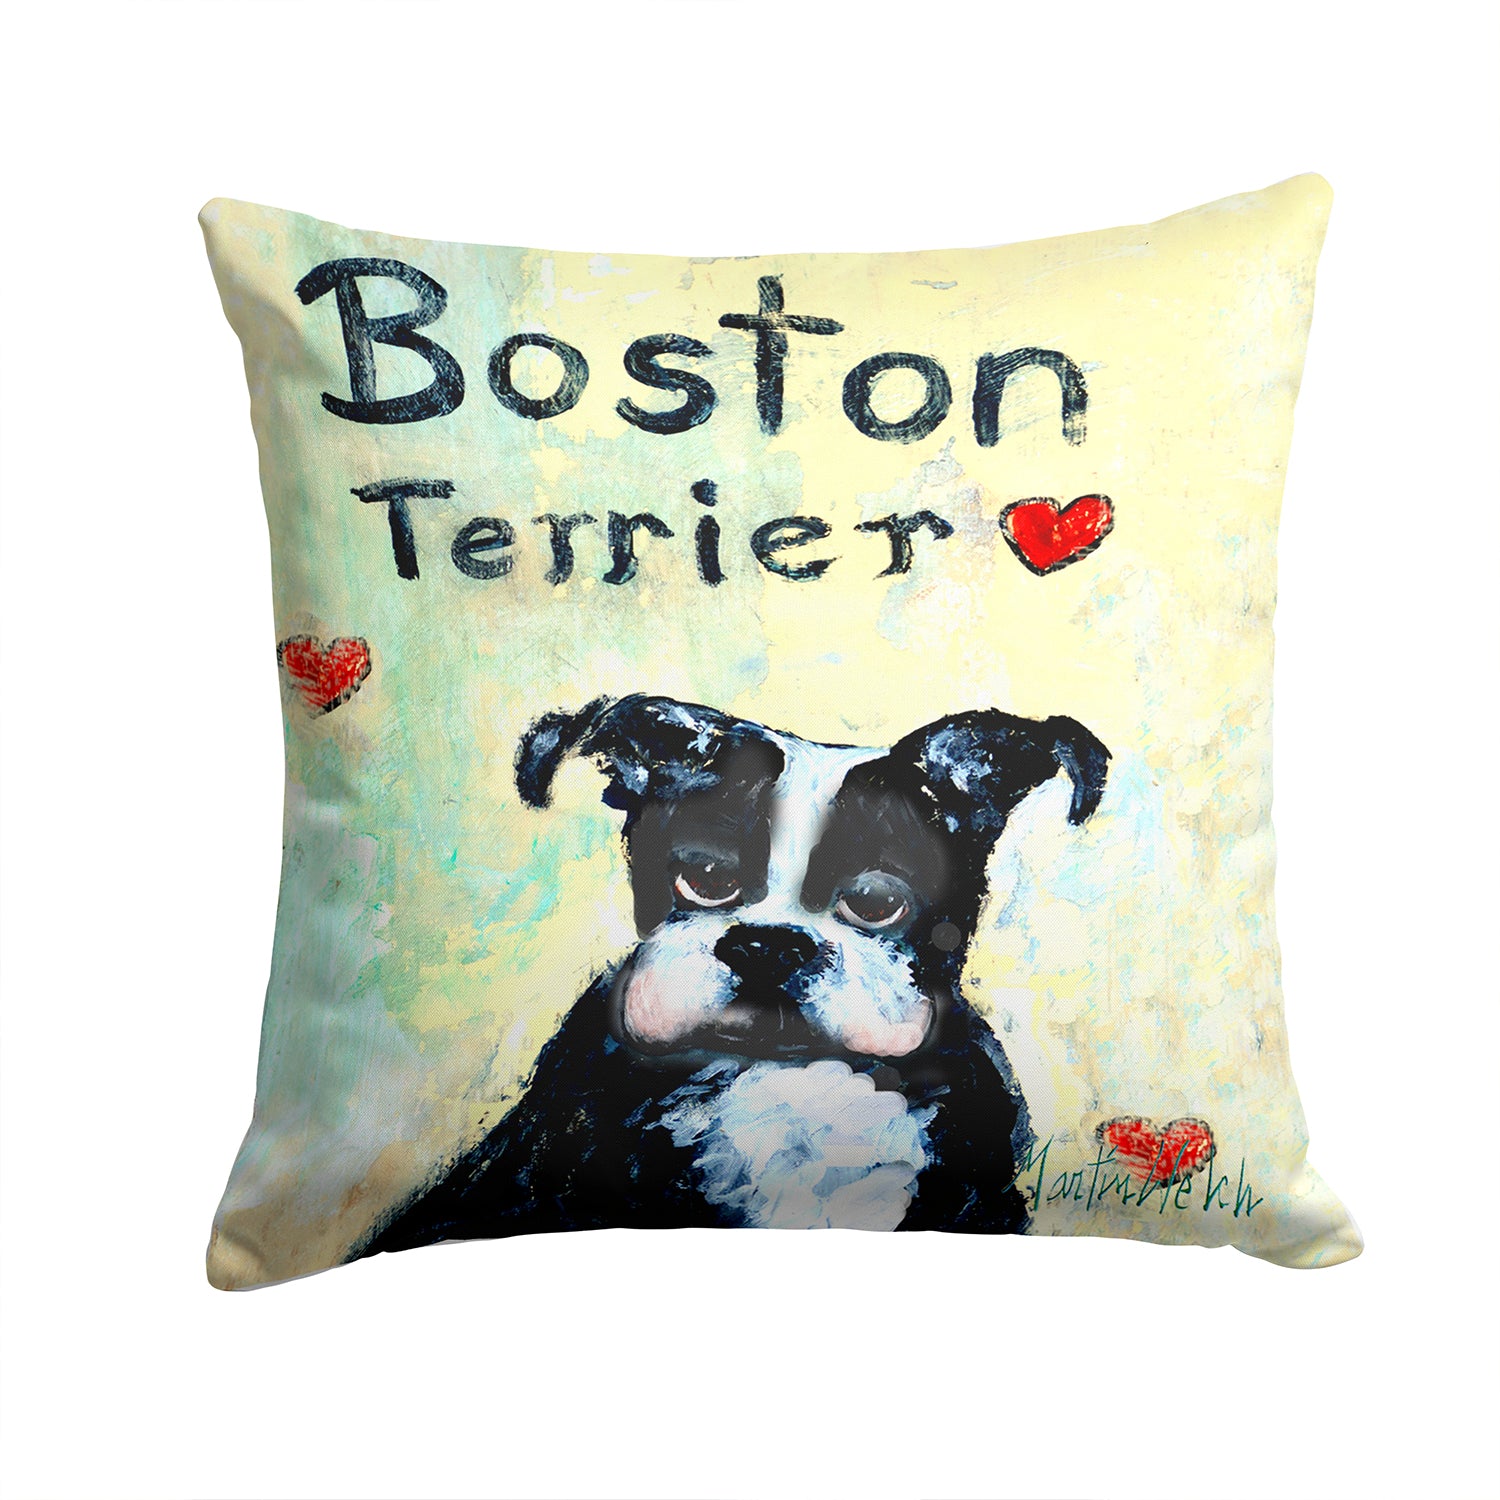 Boston Terrier Where's my Bibb Fabric Decorative Pillow MW1316PW1414 - the-store.com